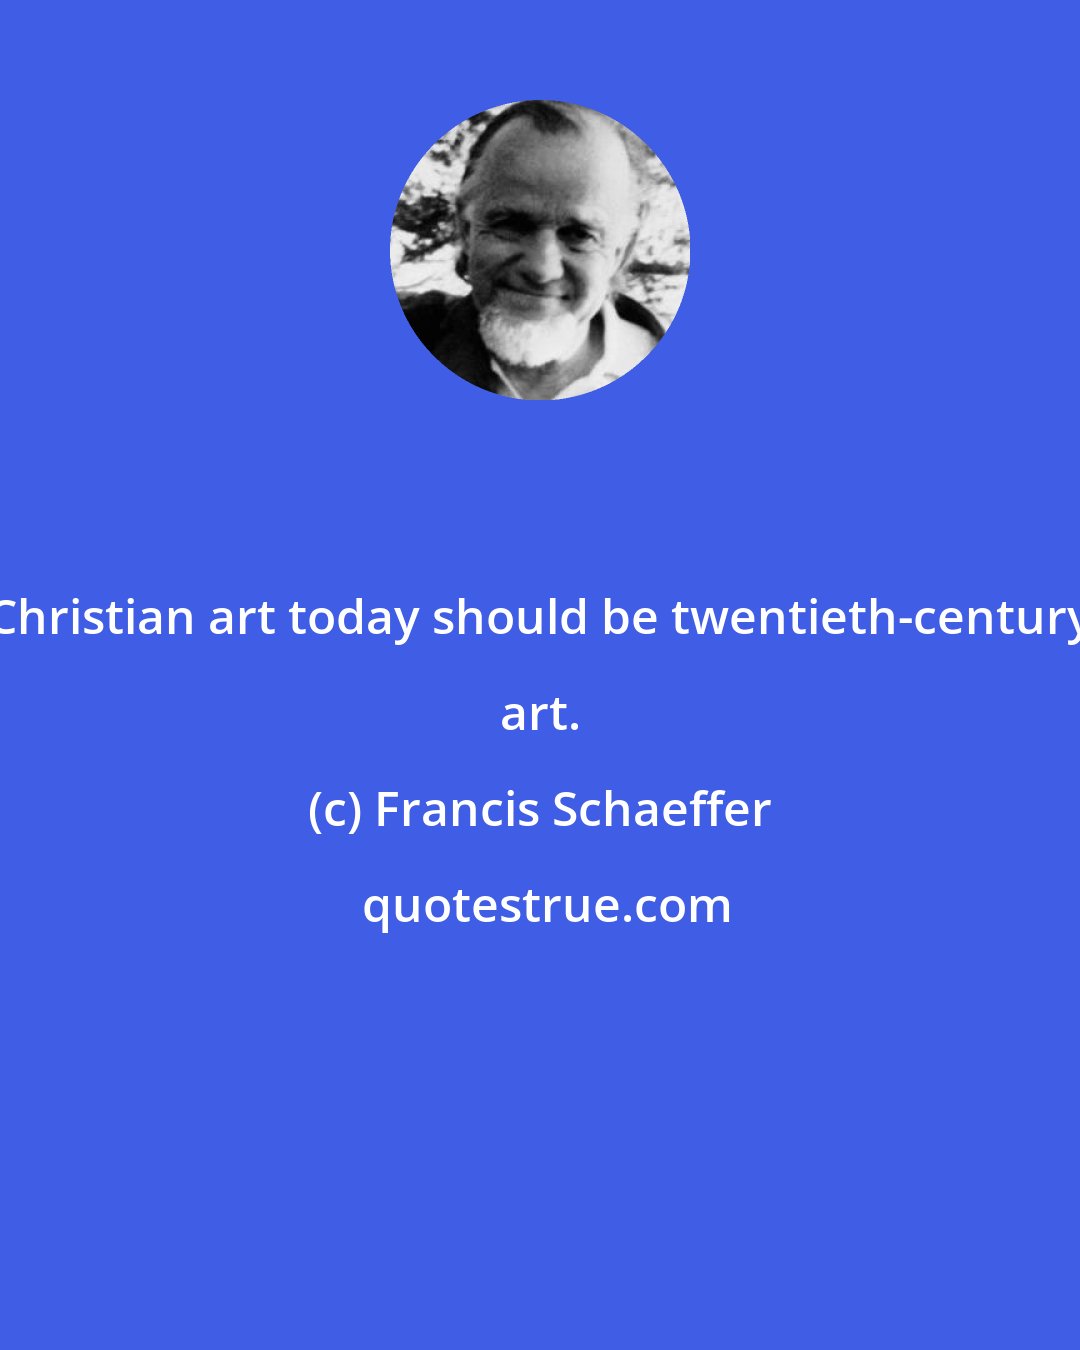 Francis Schaeffer: Christian art today should be twentieth-century art.